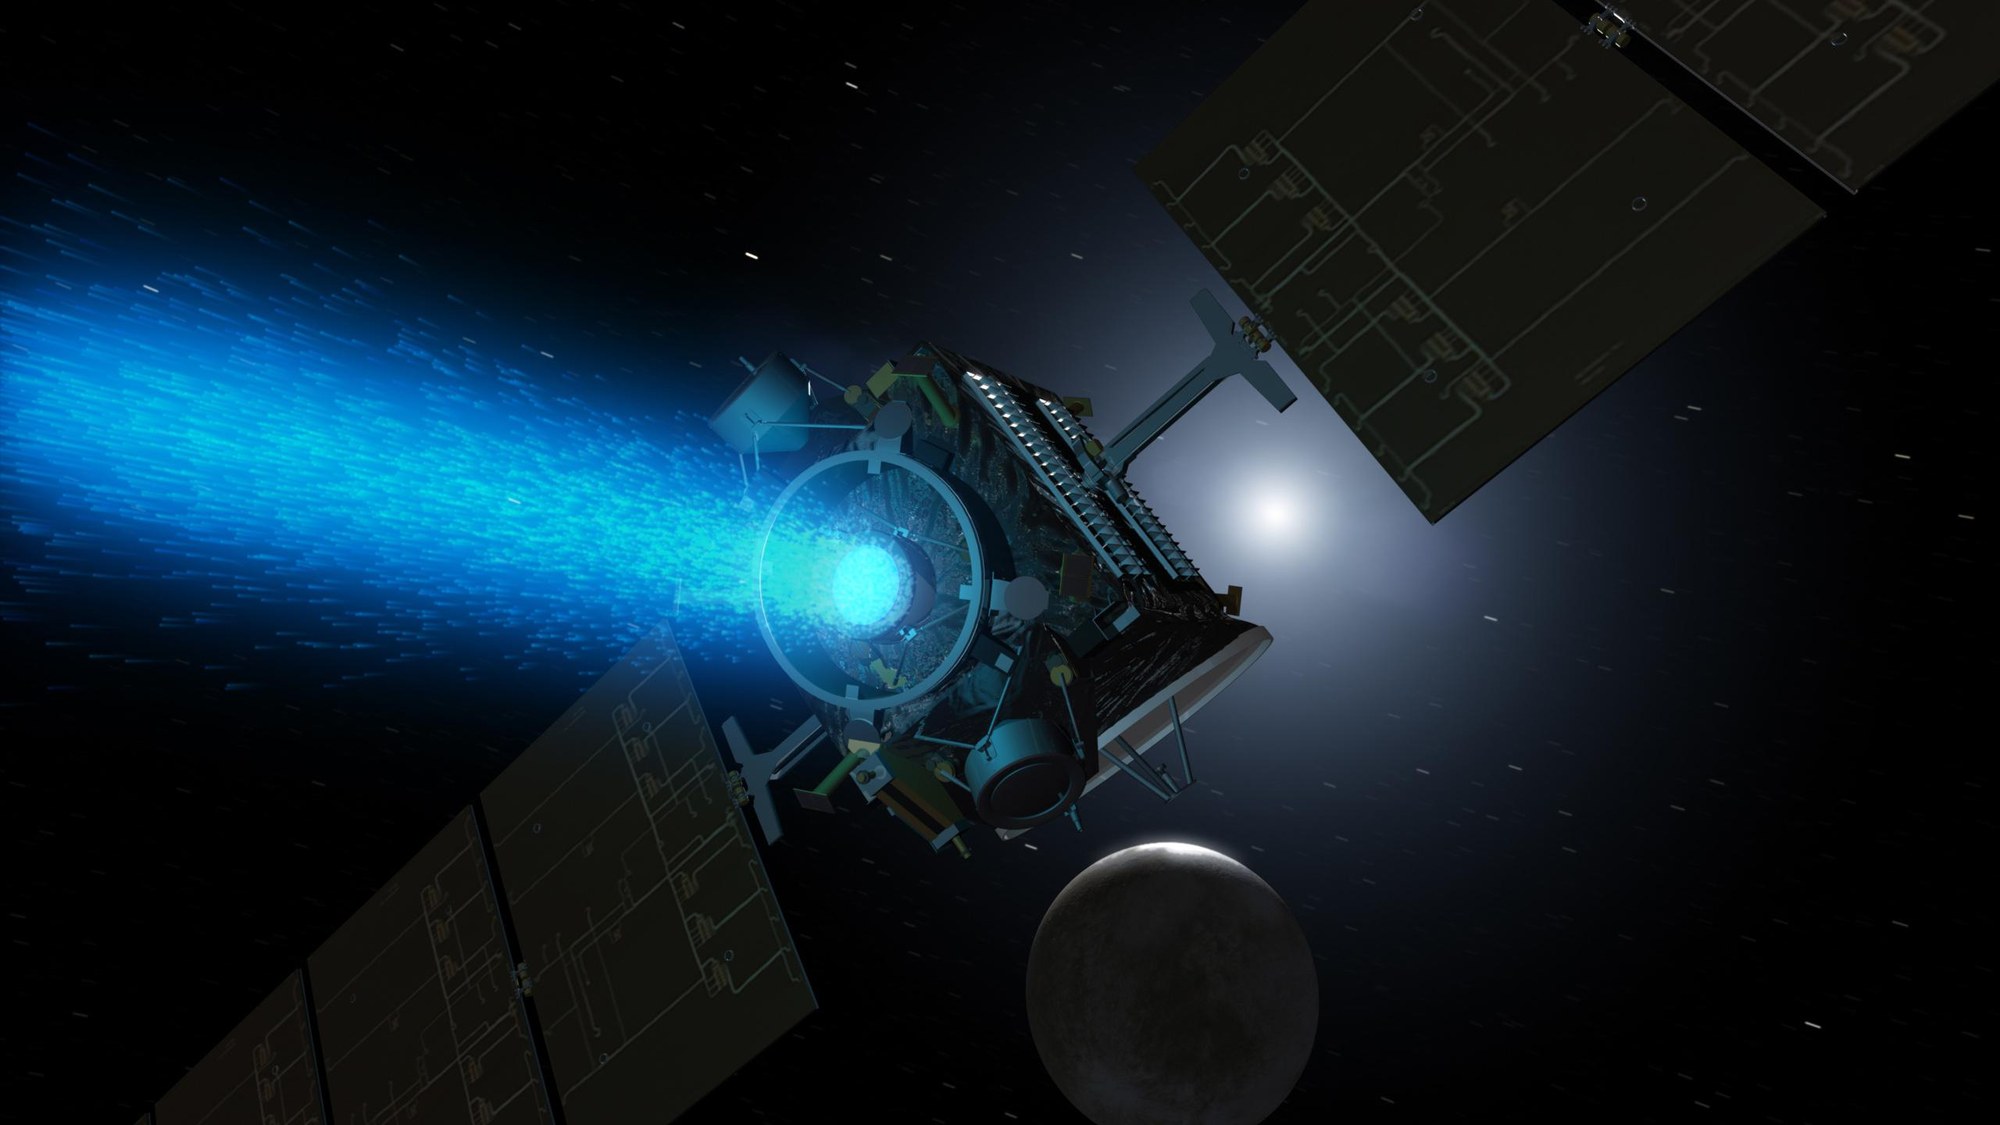 Dawn’s ion propulsion system